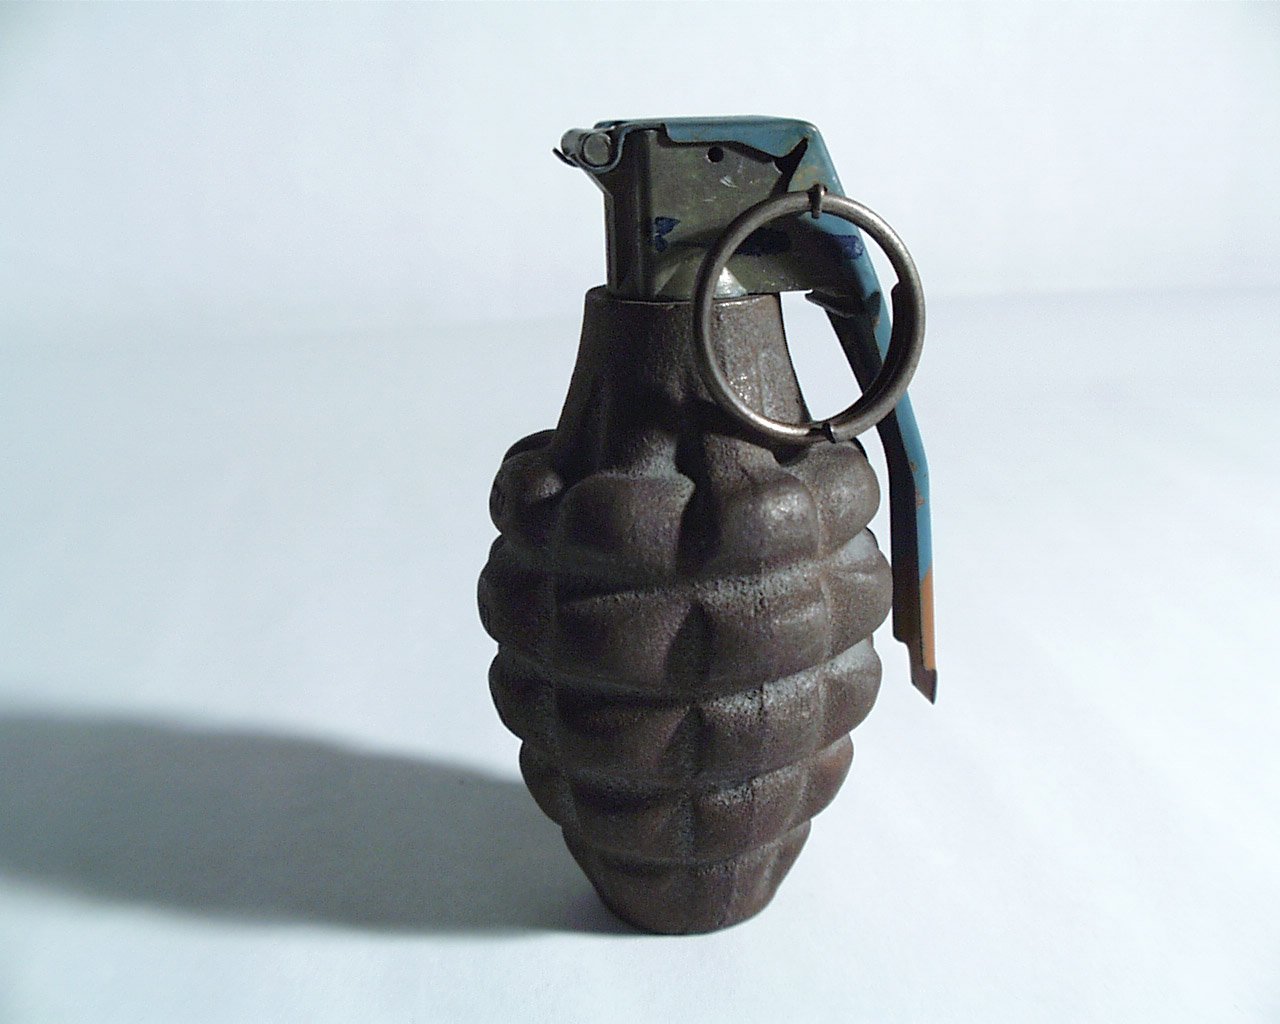 Grenade fat burner supplement